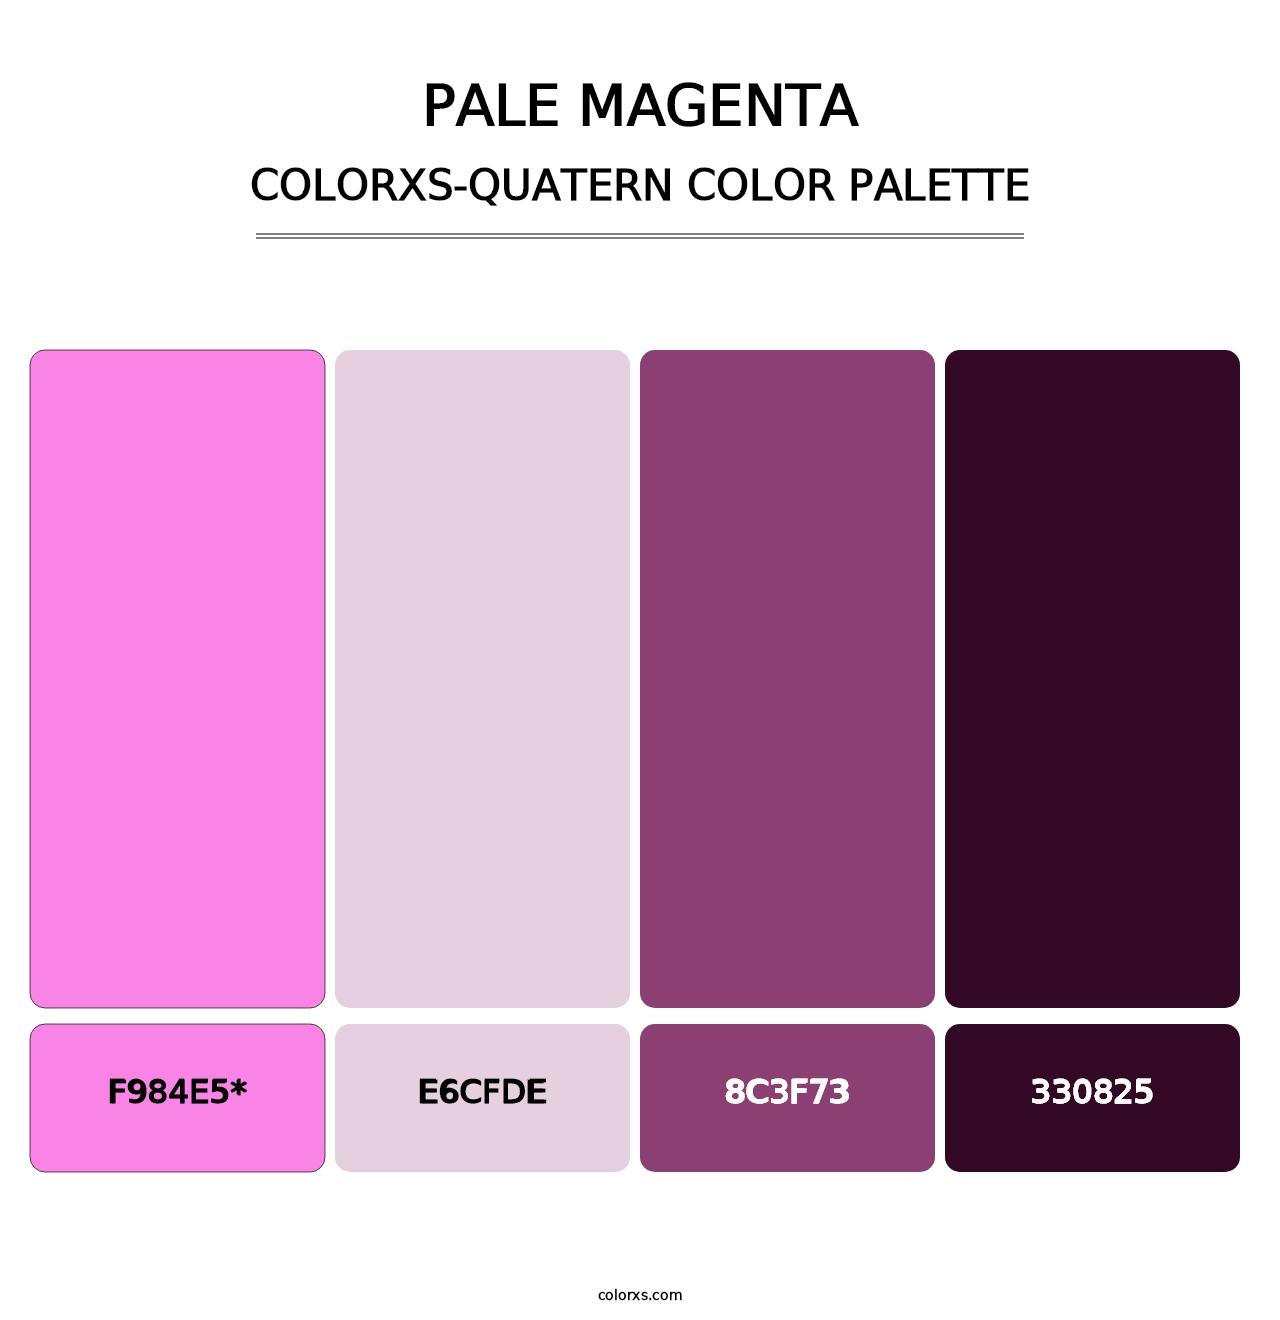 Pale Magenta - Colorxs Quatern Palette